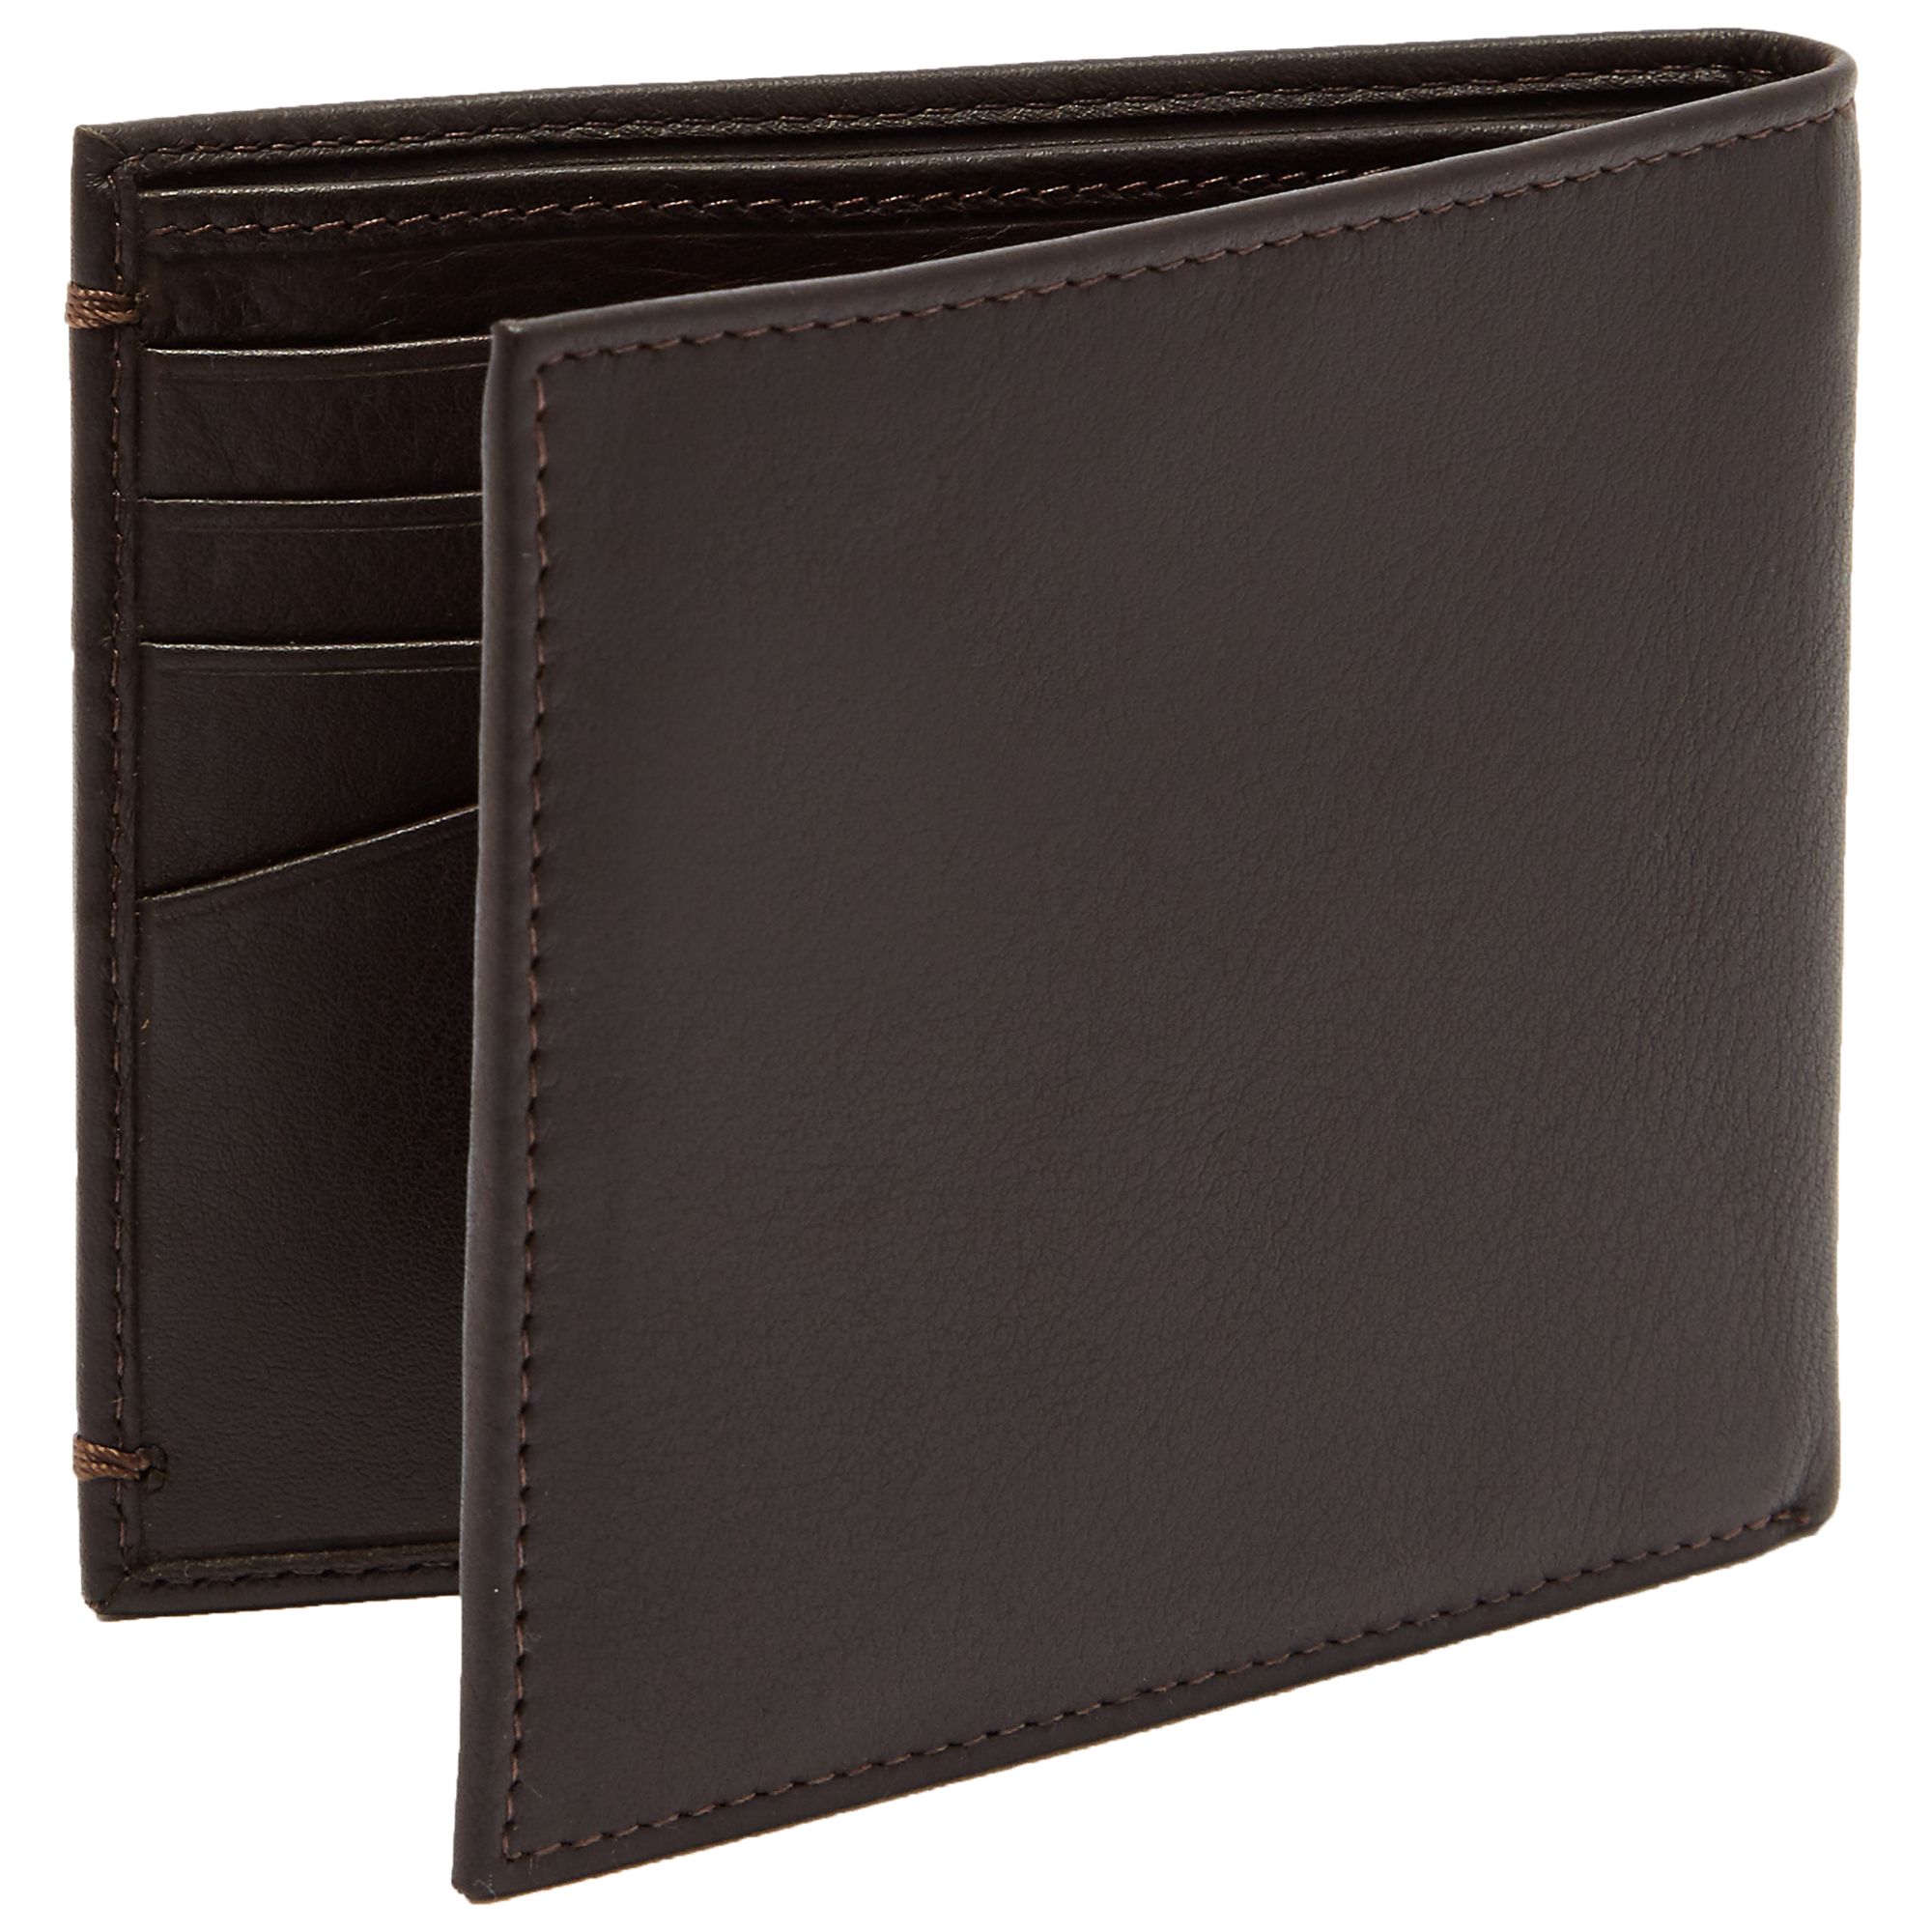 Ted Baker Anthonys Leather Bifold Wallet, Black at John Lewis & Partners